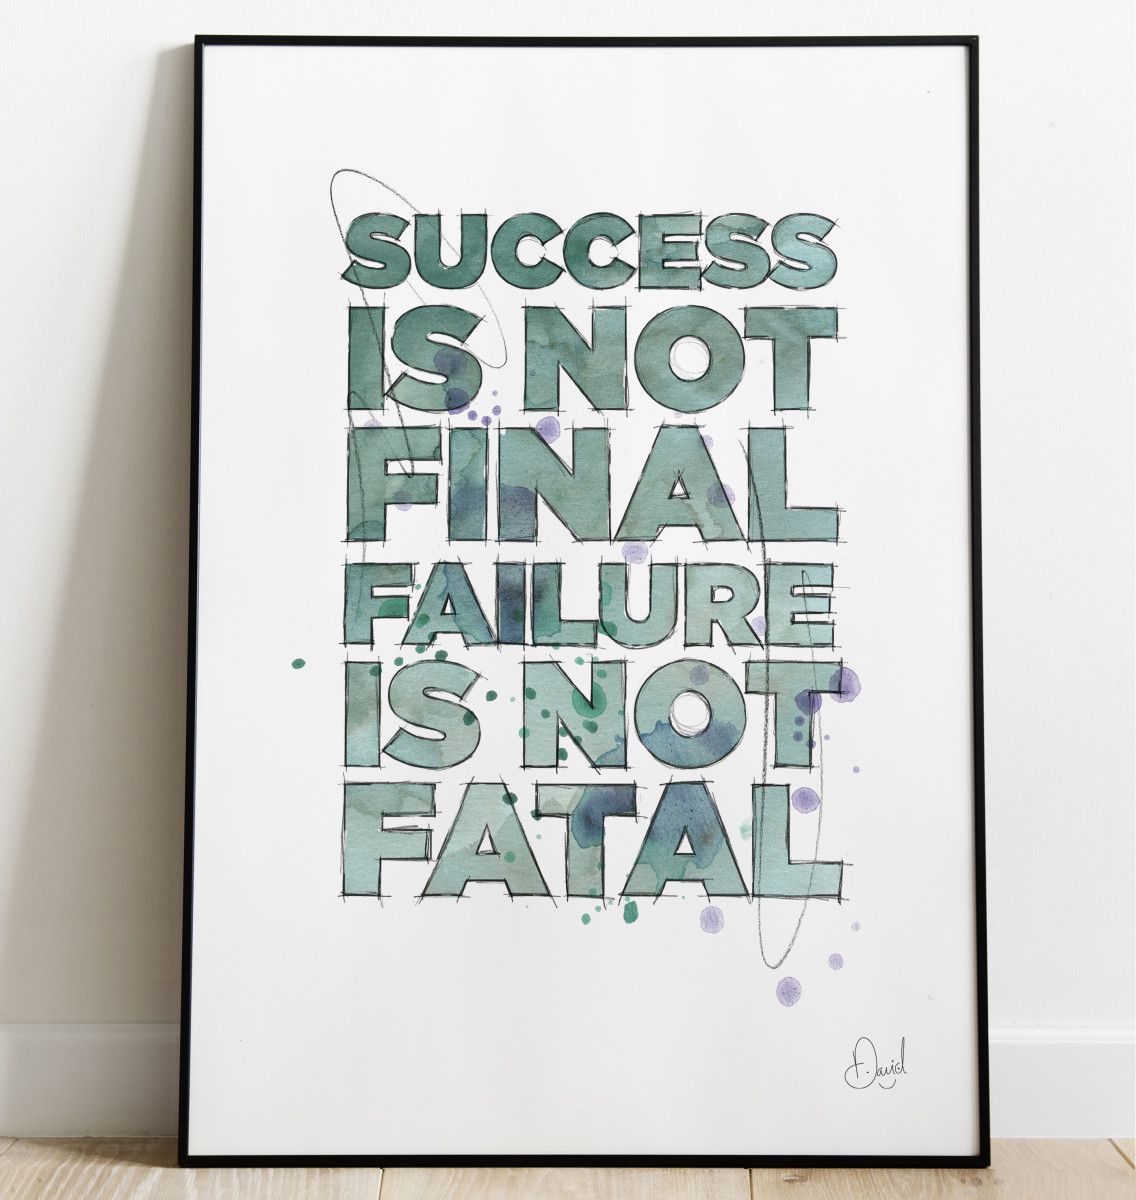 Success is not final - Typographic art print